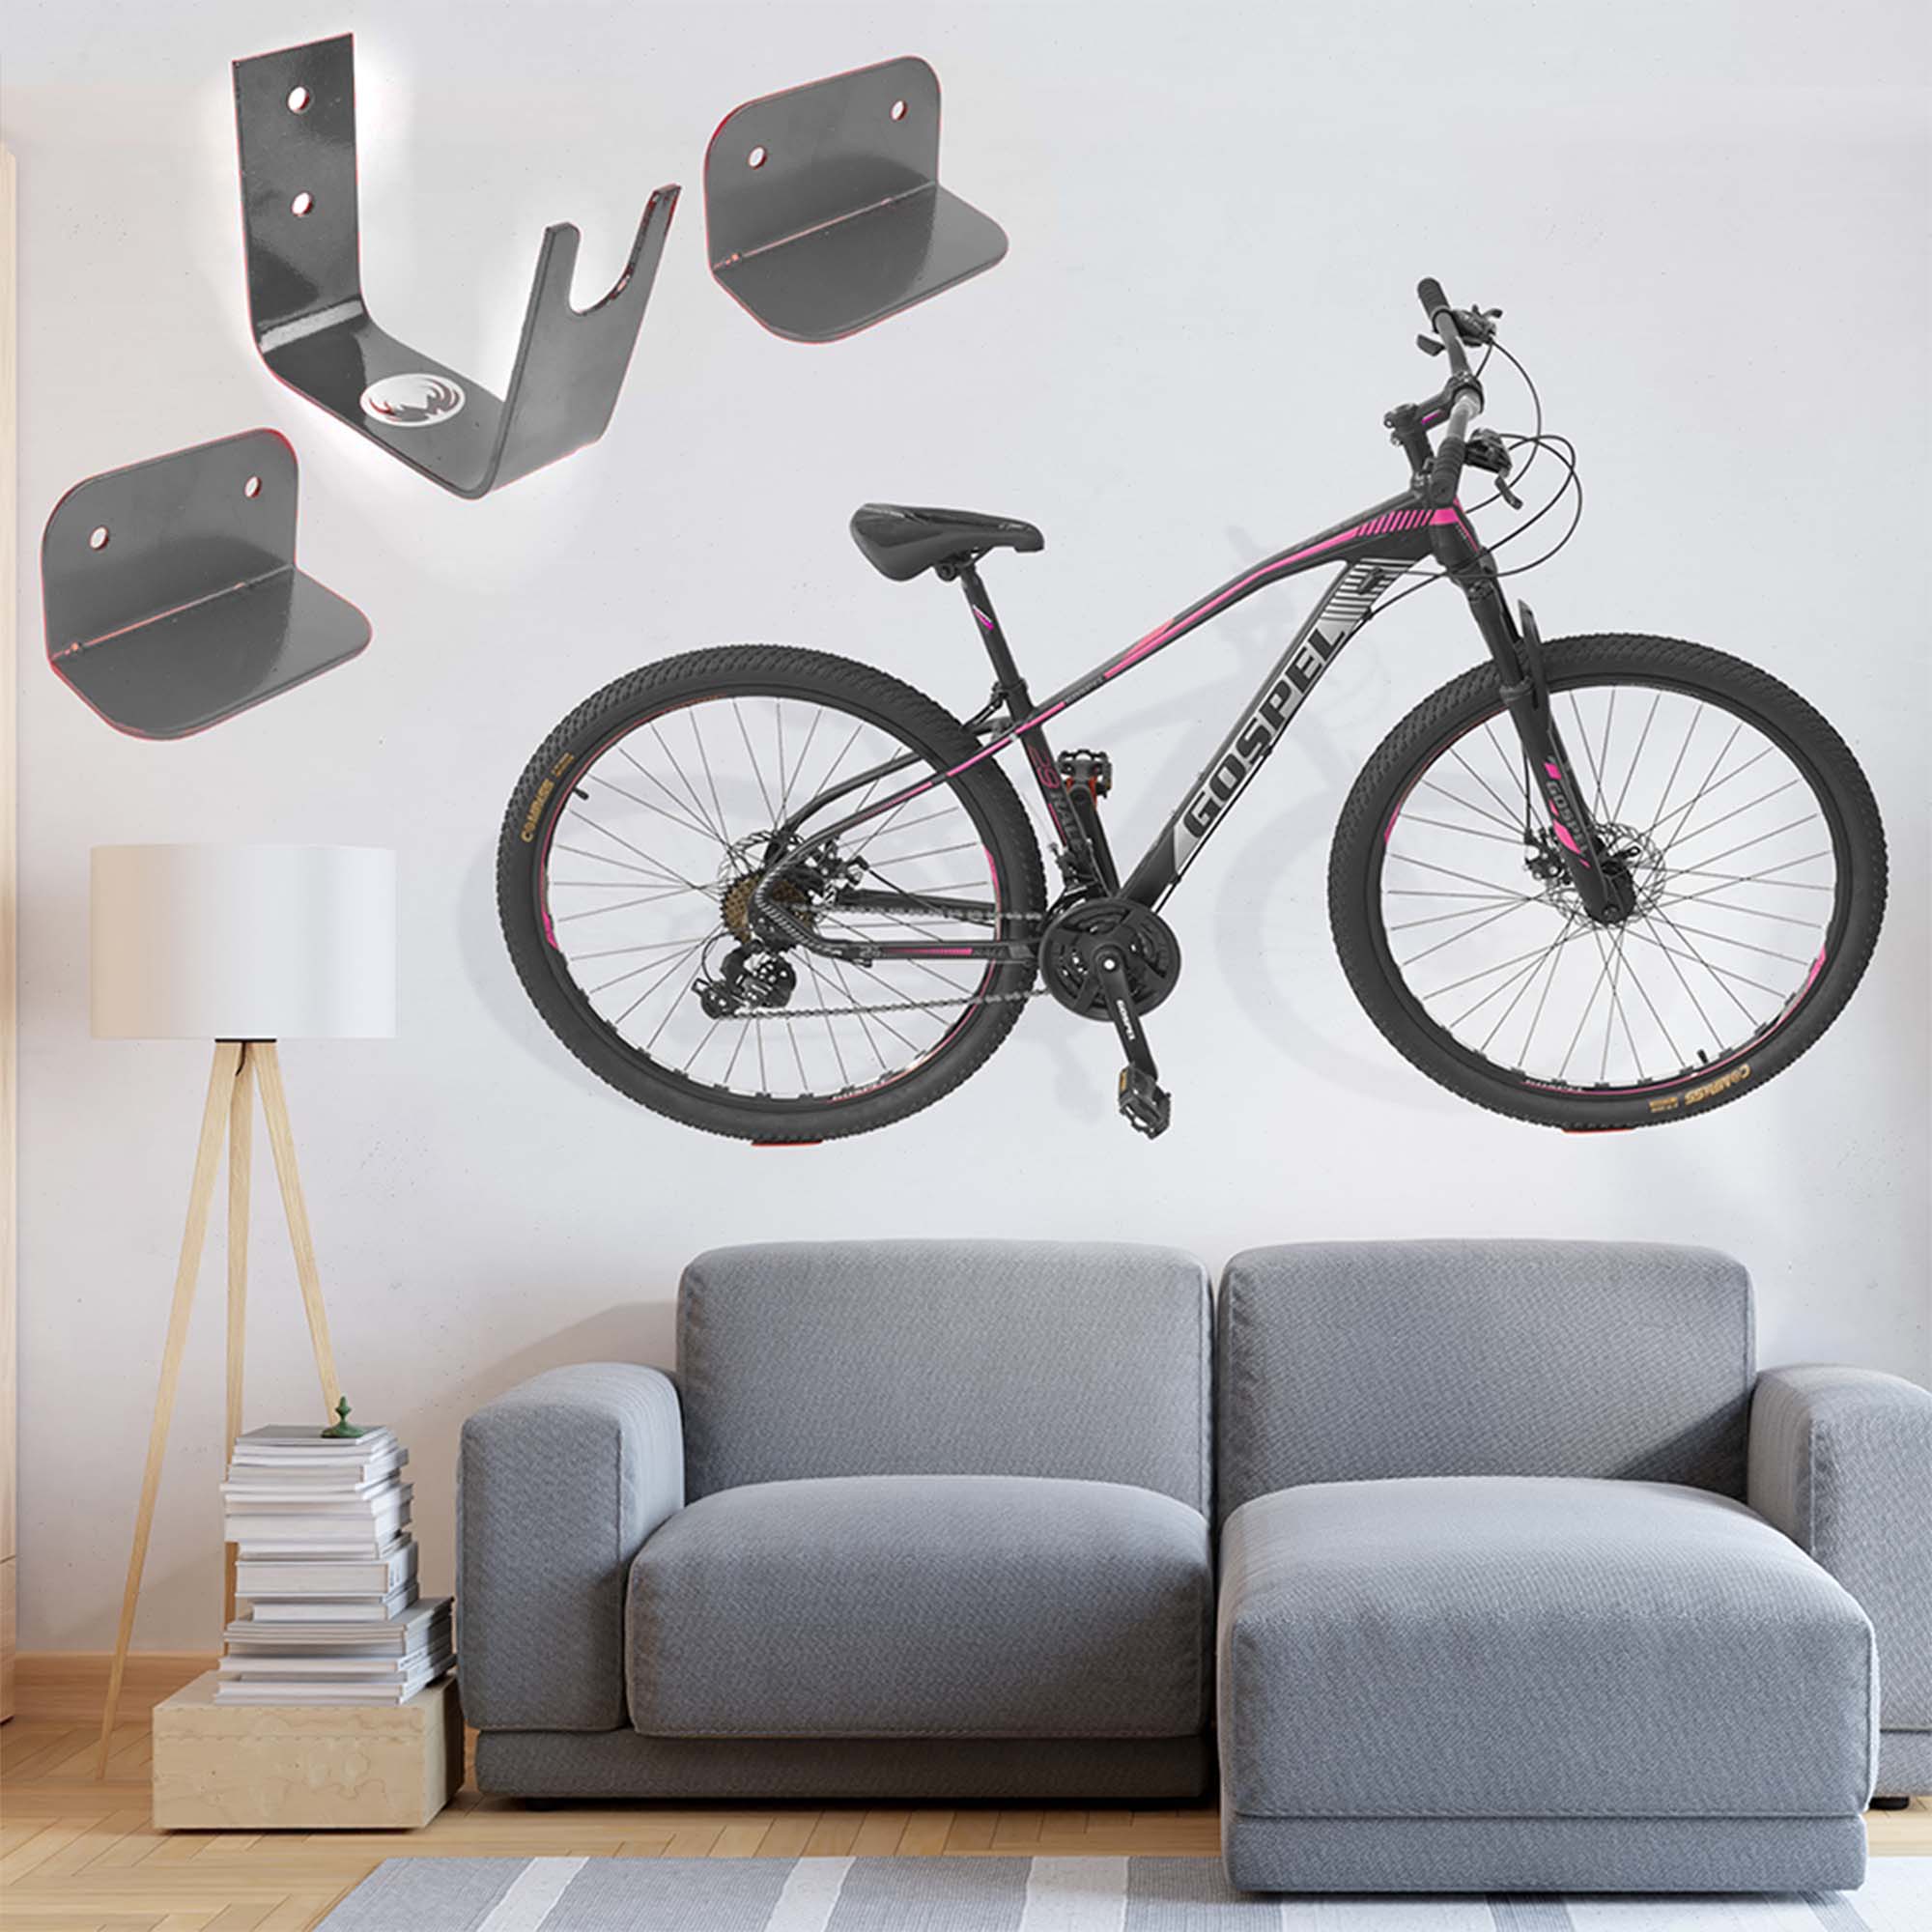 Soporte de pared para bicicletas / Soporte para bicicletas montado